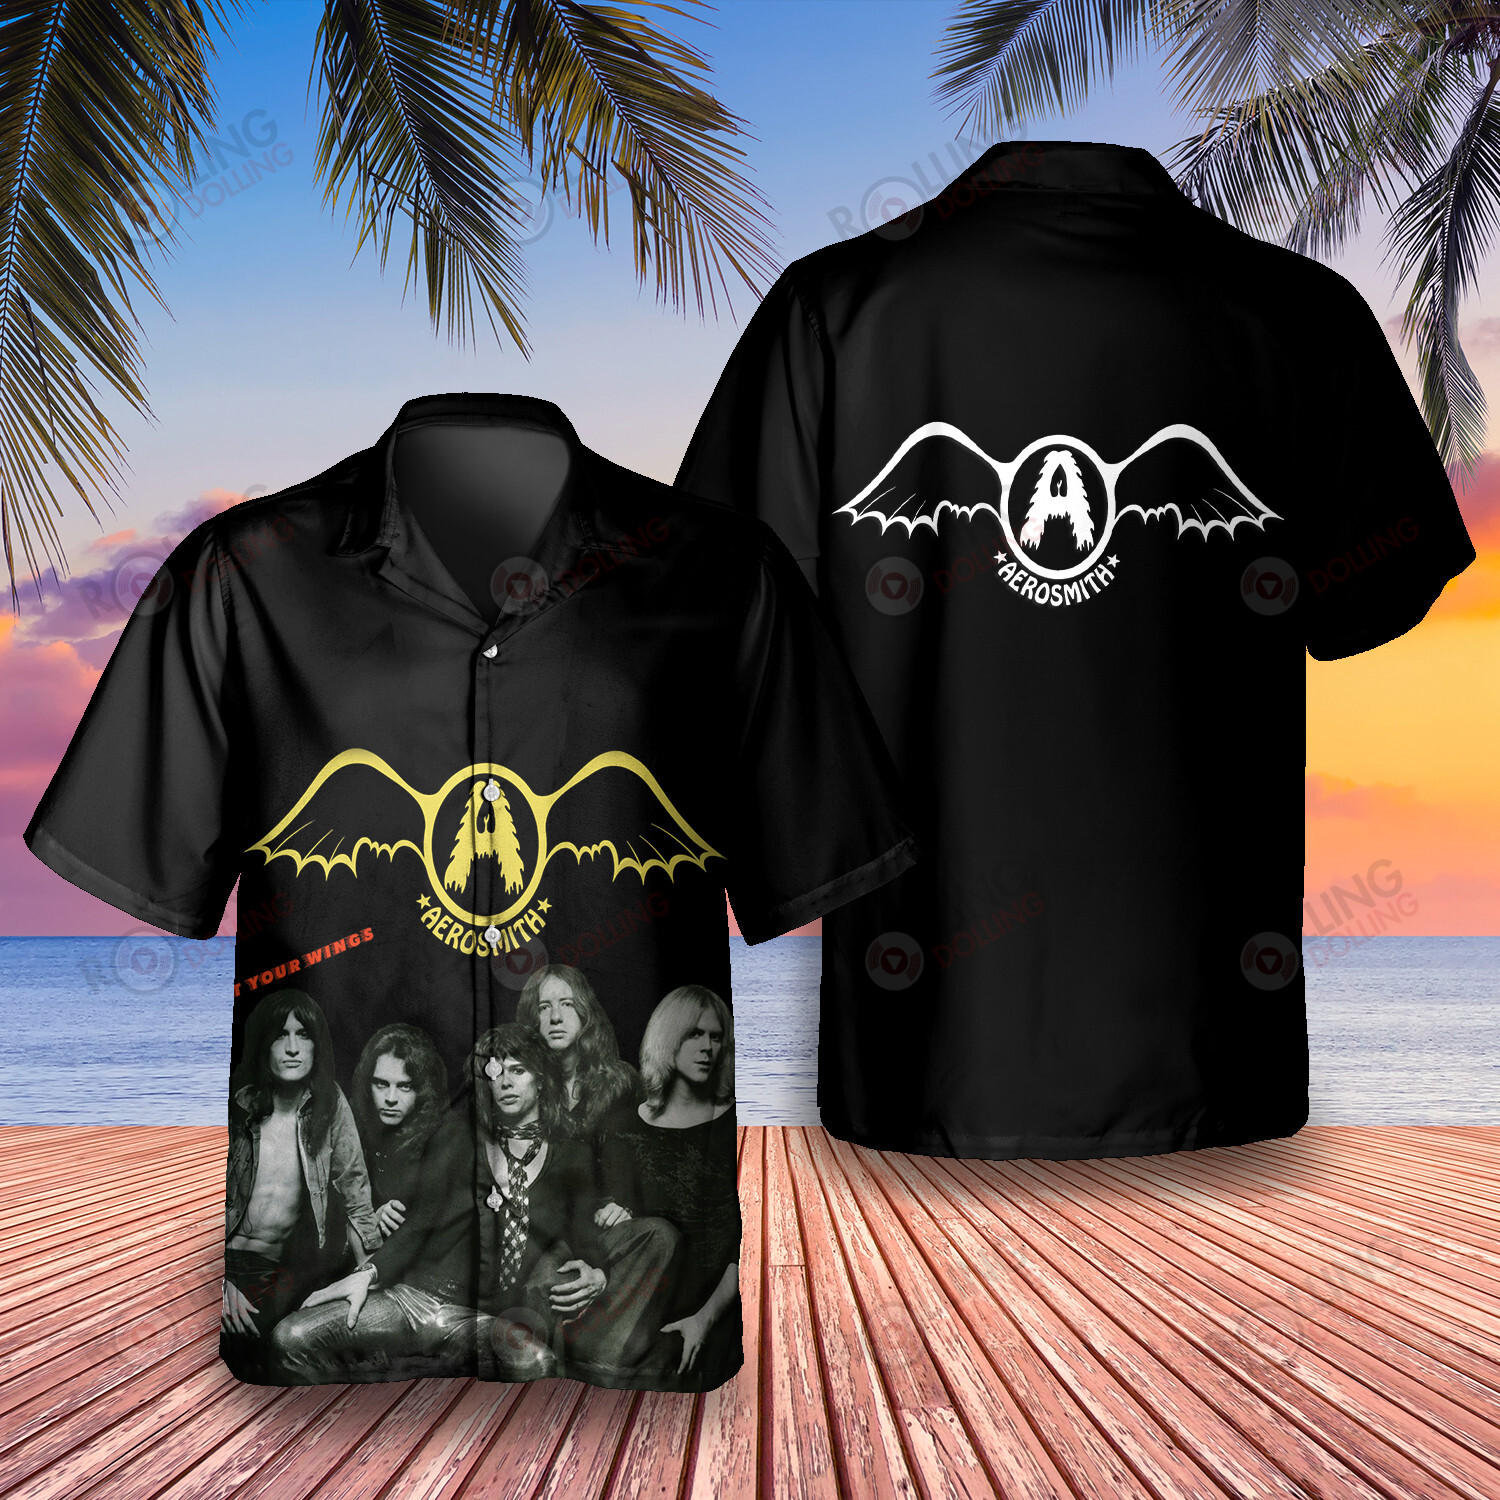 Regardless of their style, you will feel comfortable wearing Hawaiian Shirt 80